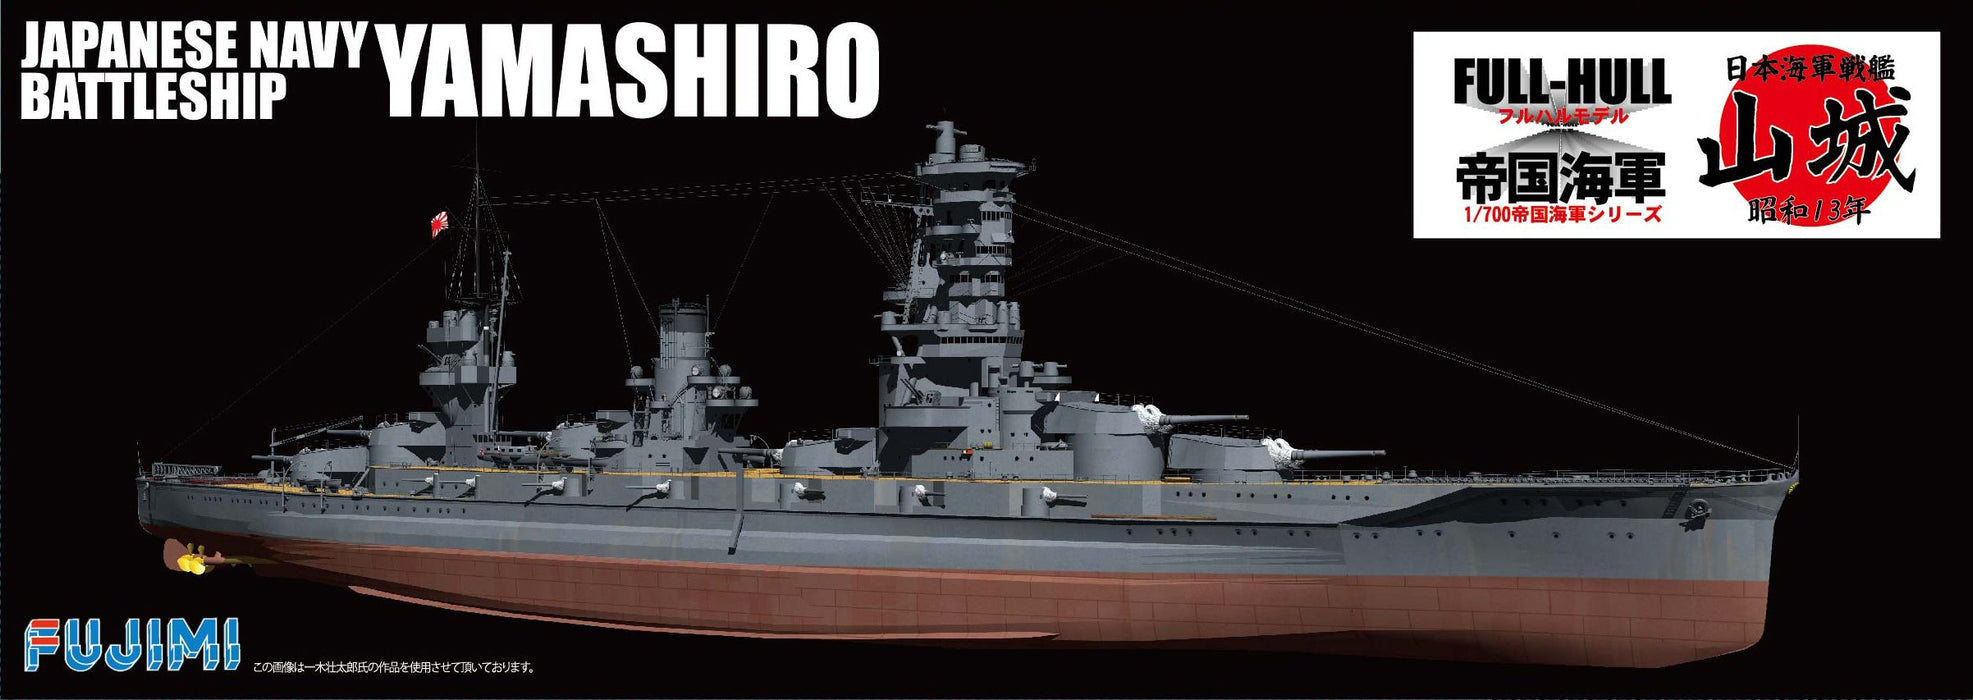 Fujimi Model 1/700 Imperial Navy Series No.30 Japanese Navy Battleship Yamashiro Full Hull Model